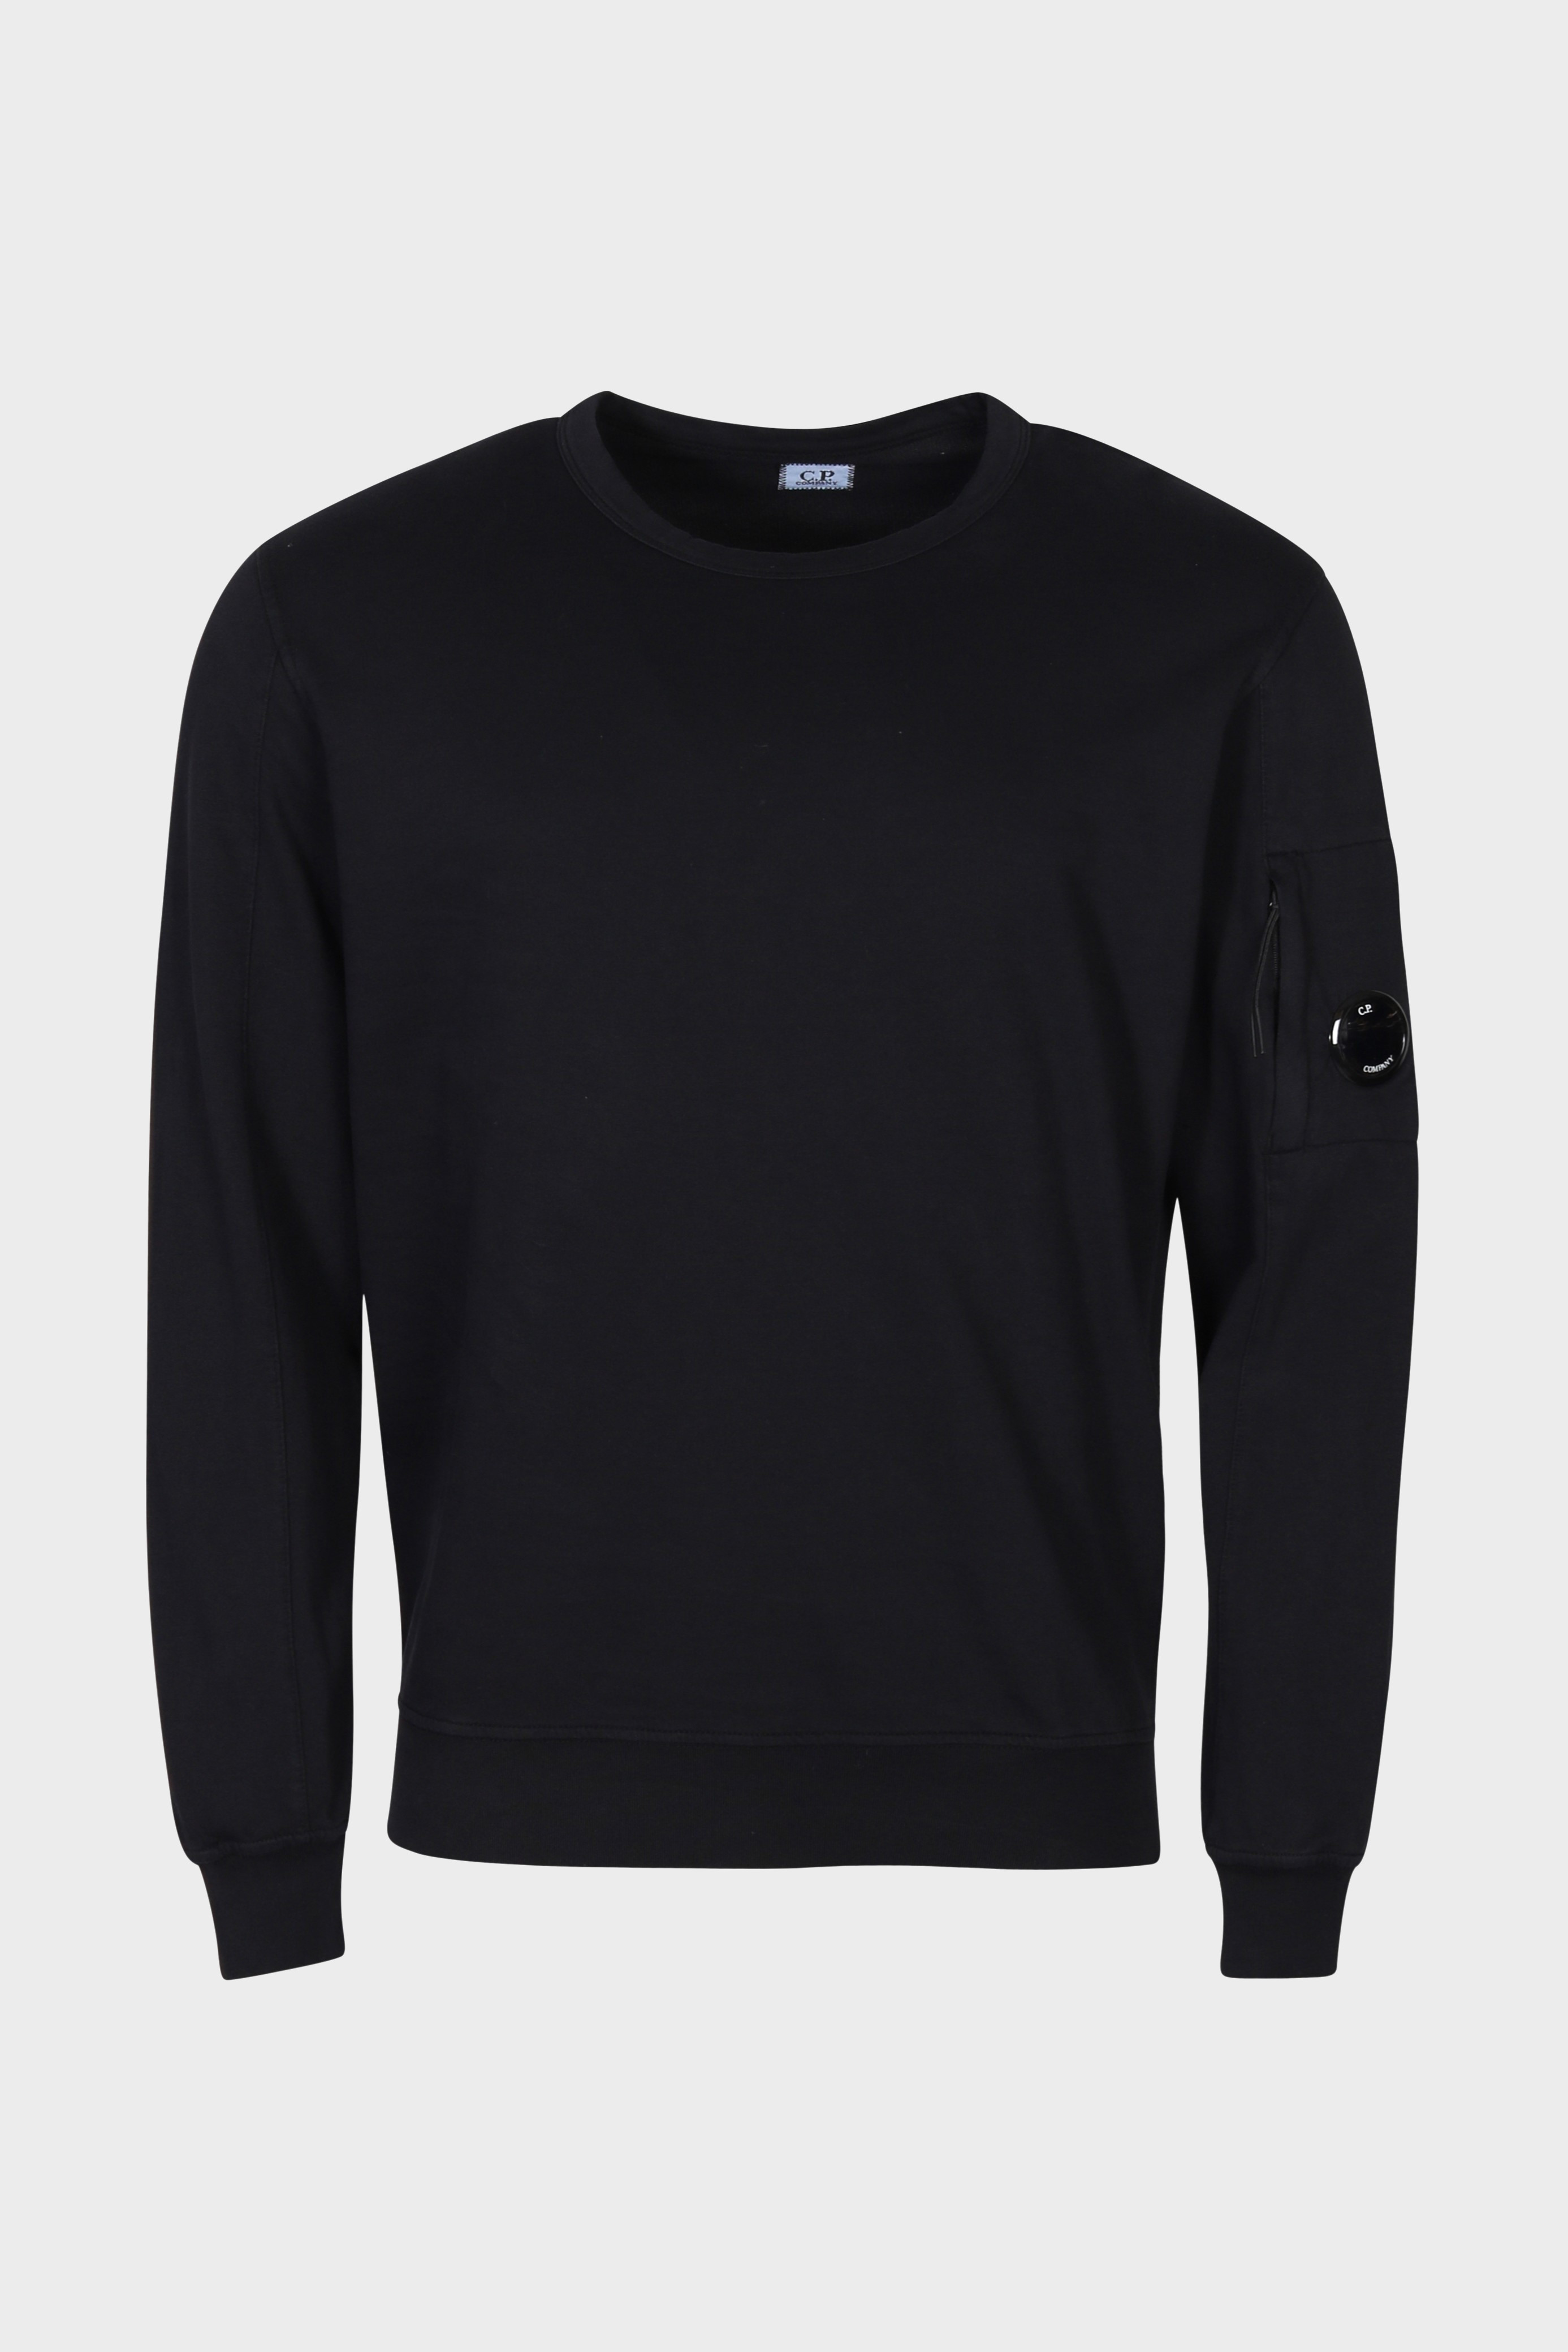 C.P. COMPANY Light Fleece Sweatshirt in Black M